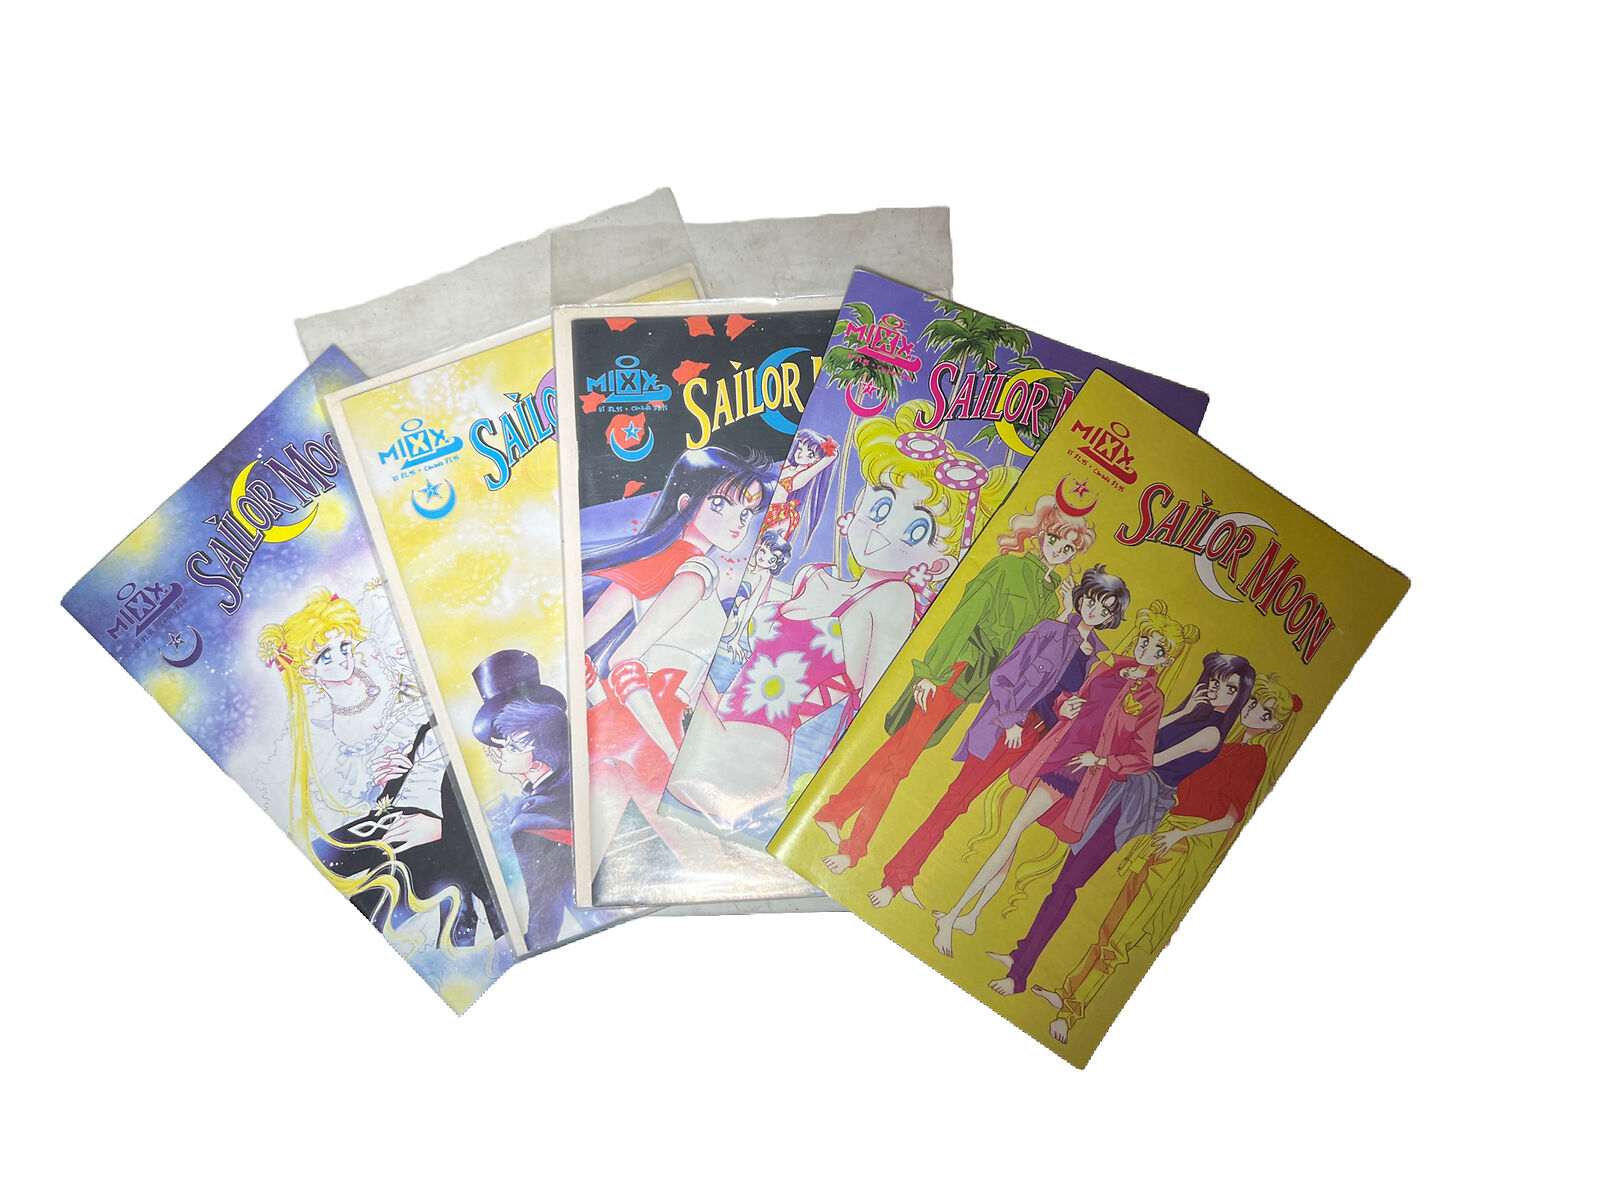 SAILOR MOON #s 4, 5, 6, 7, 8 - Comic Book Lot of 5 -